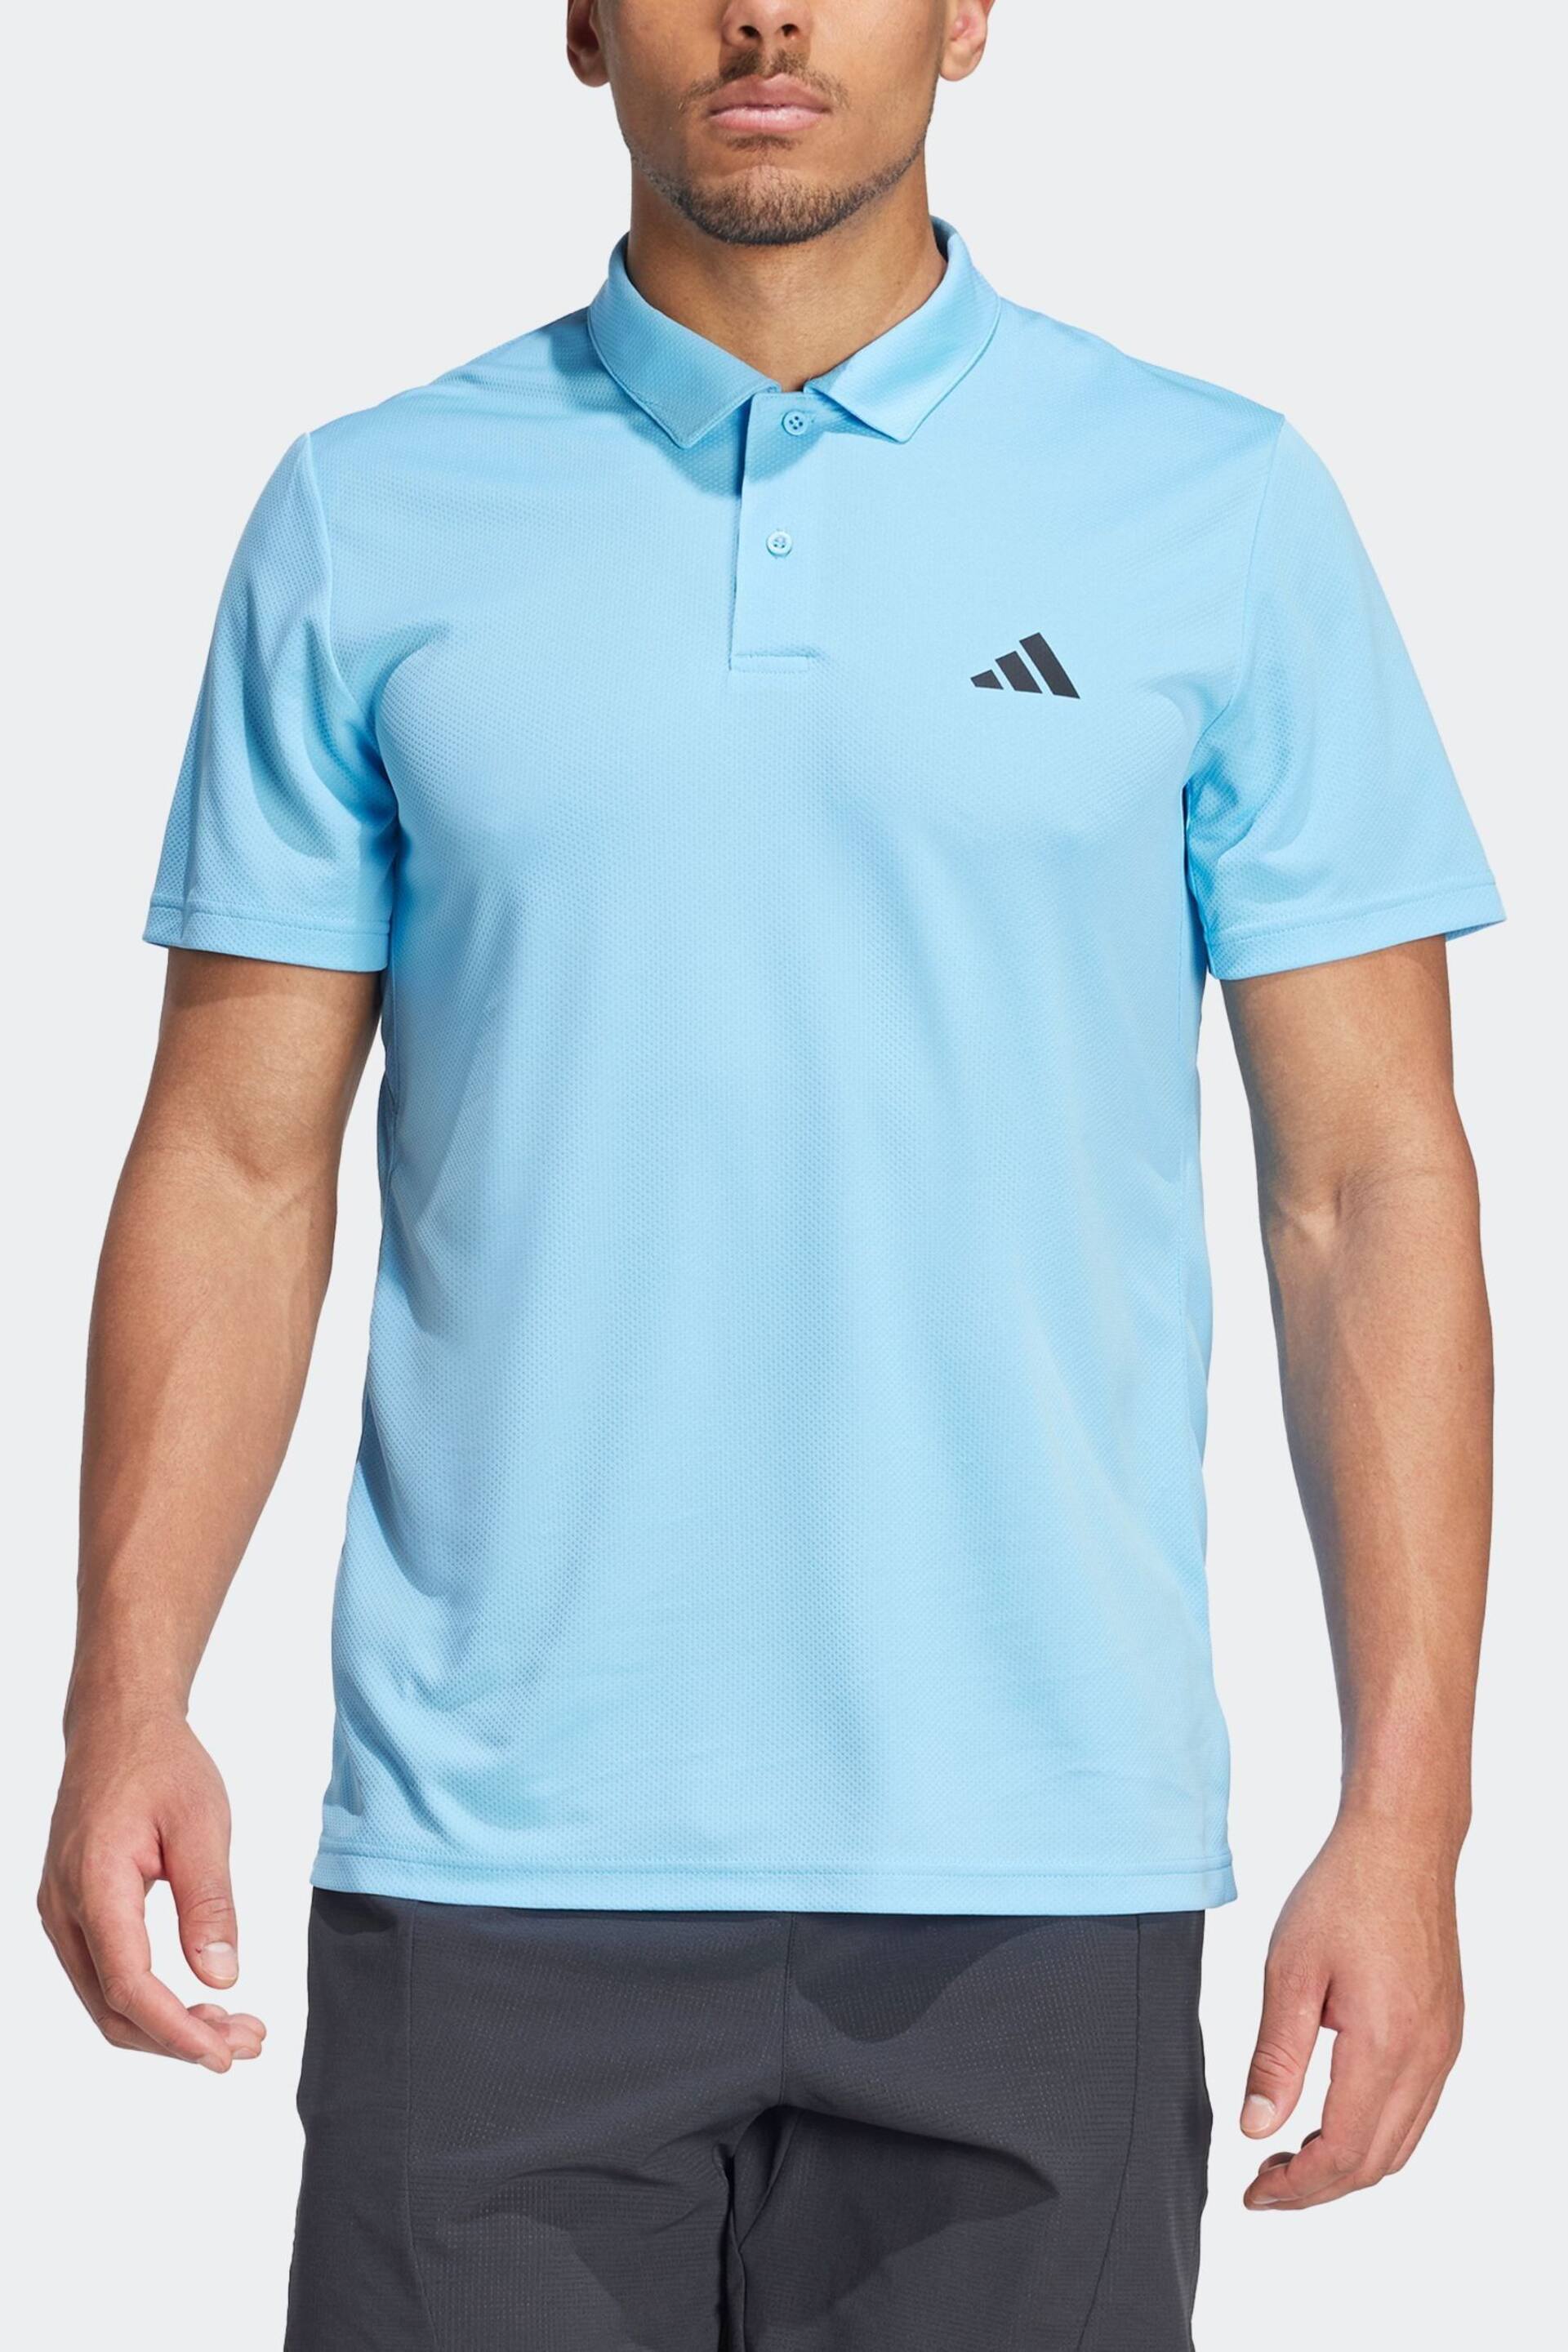 adidas Light Blue Train Essentials Training Polo Shirt - Image 2 of 7